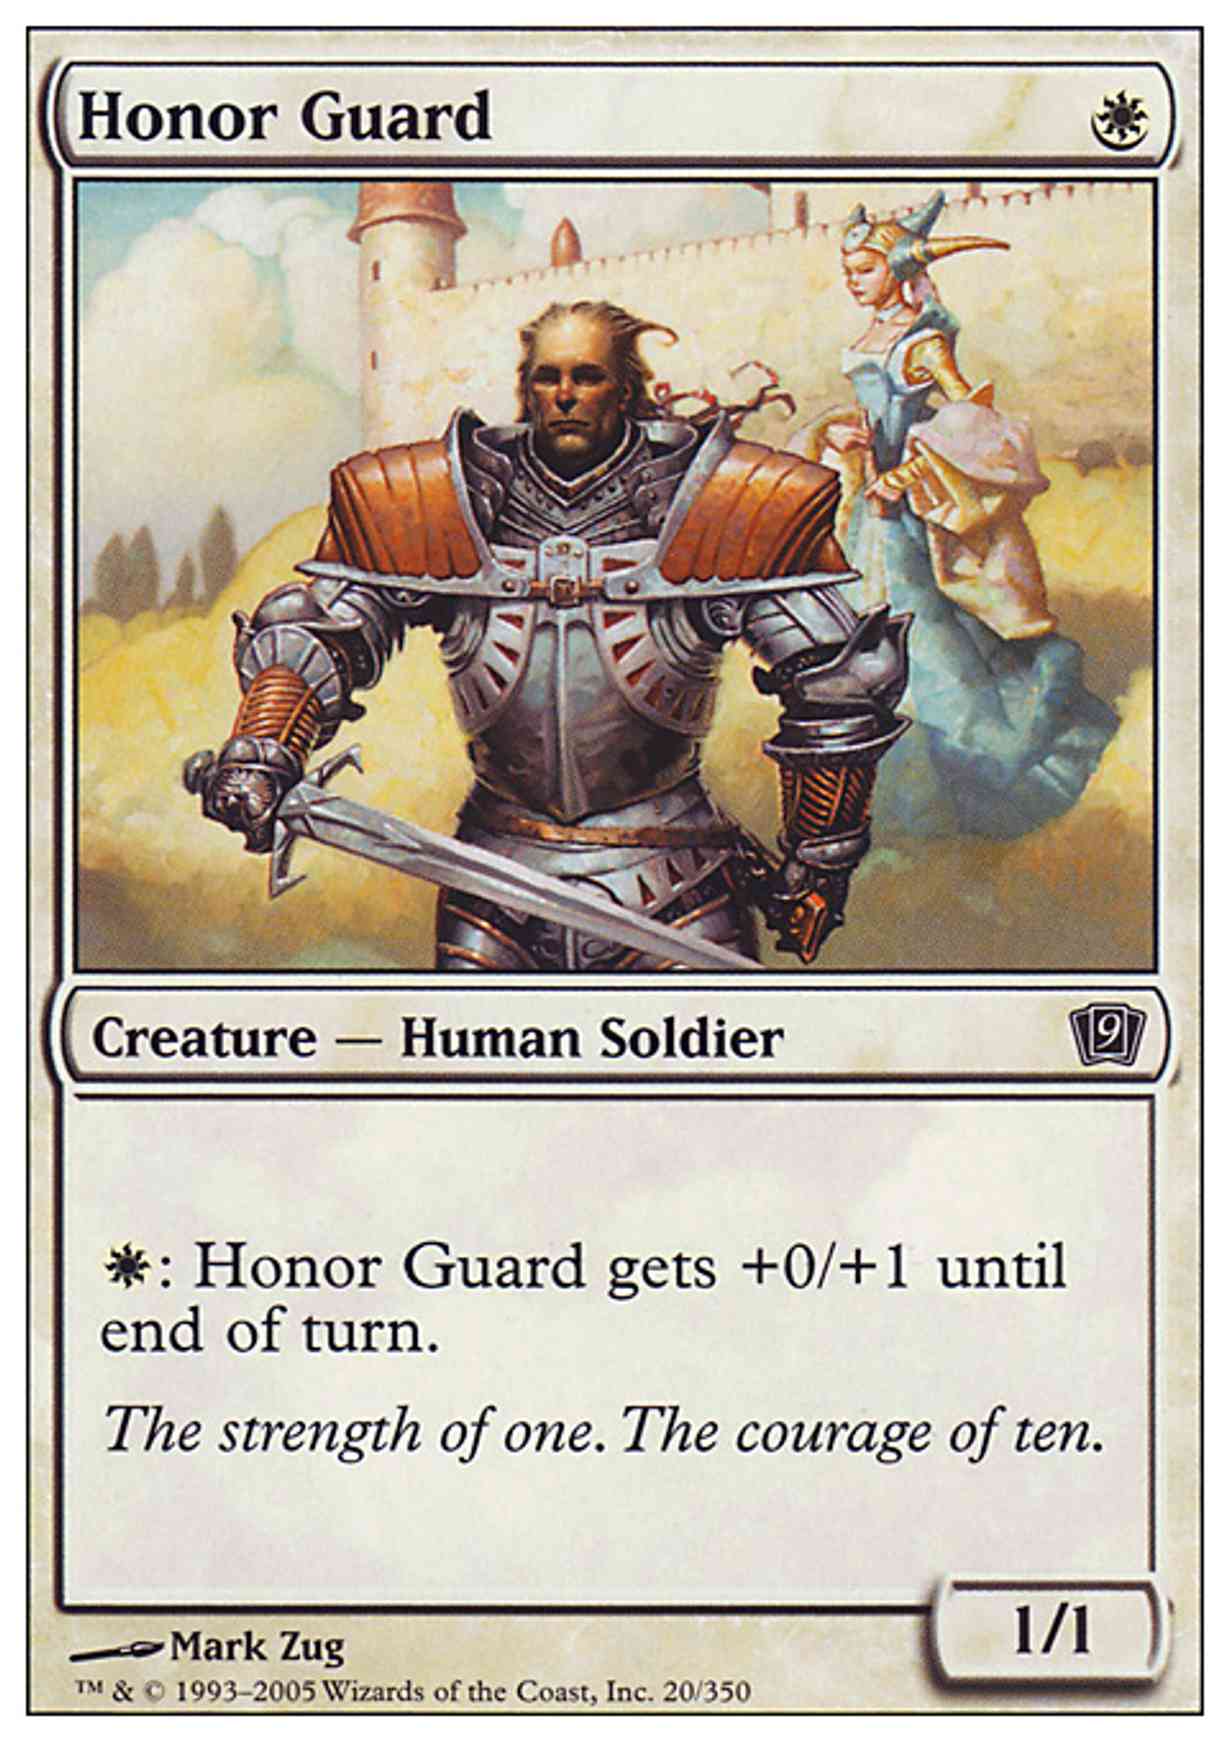 Honor Guard magic card front